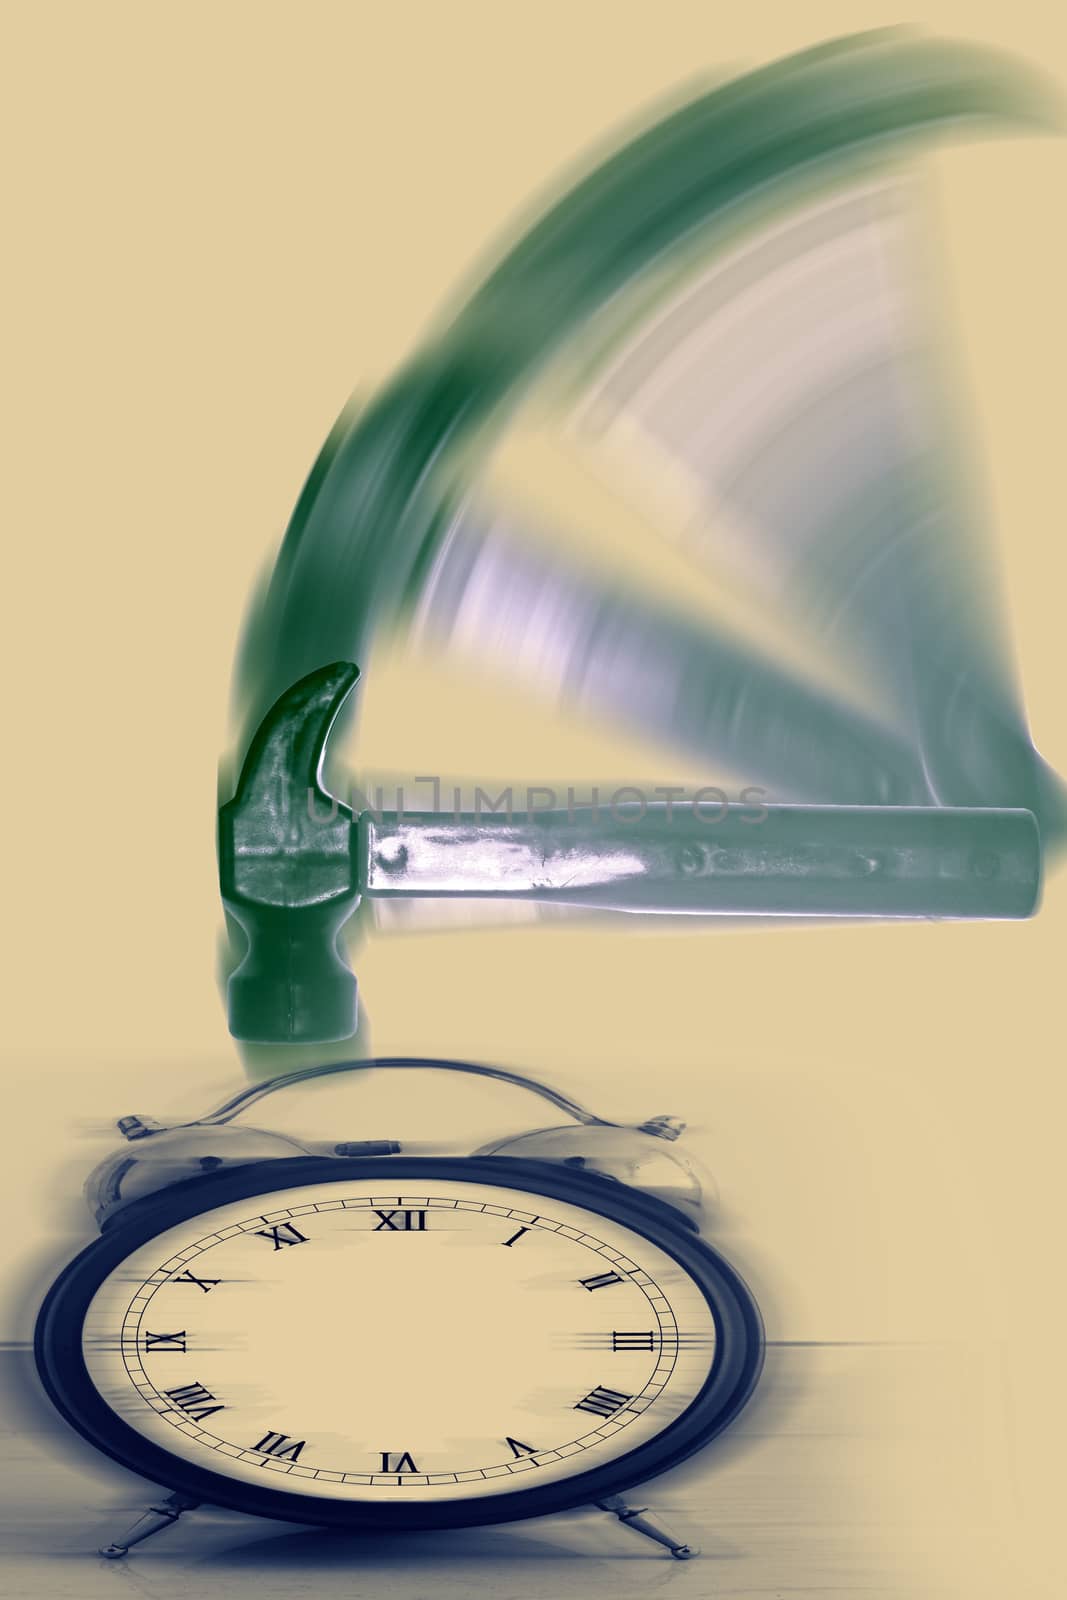 Hammer hitting Alarm Clock with motion blur